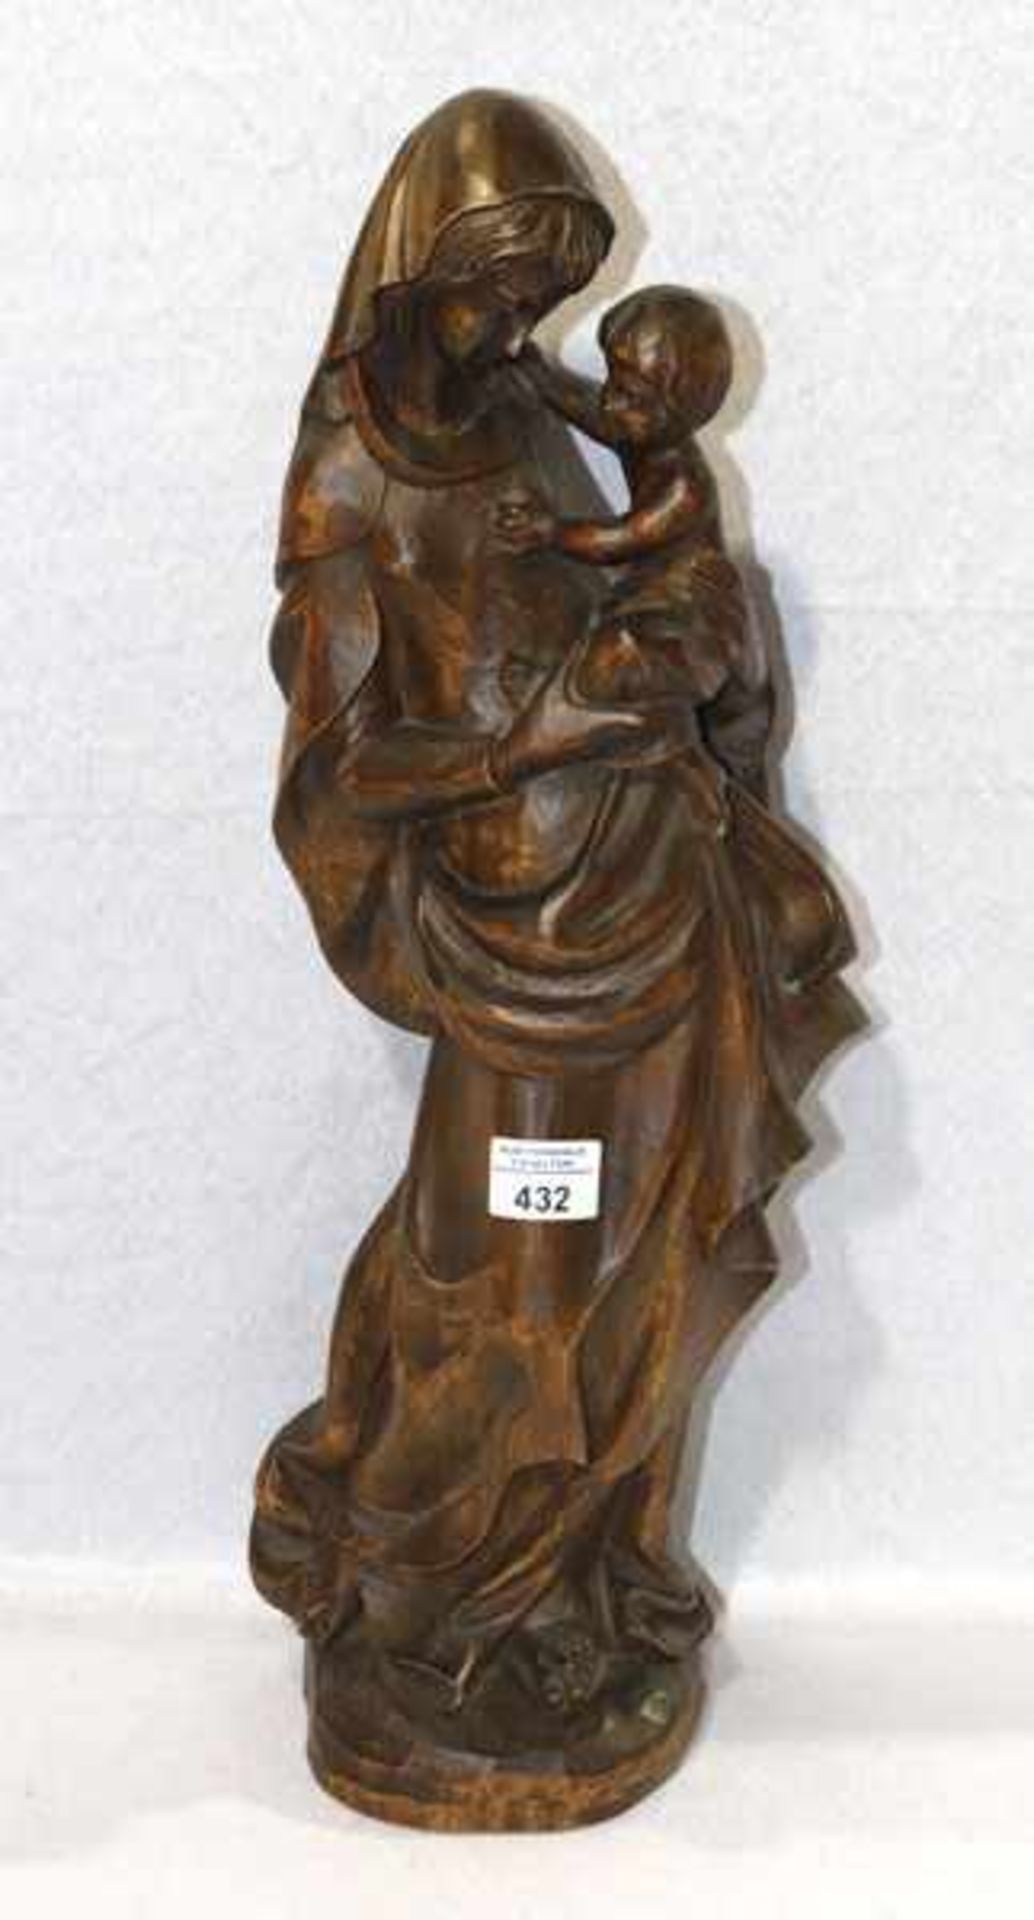 Holz Figurenskulptur 'Maria mit Kind', dunkel gebeizt, H 55 cm